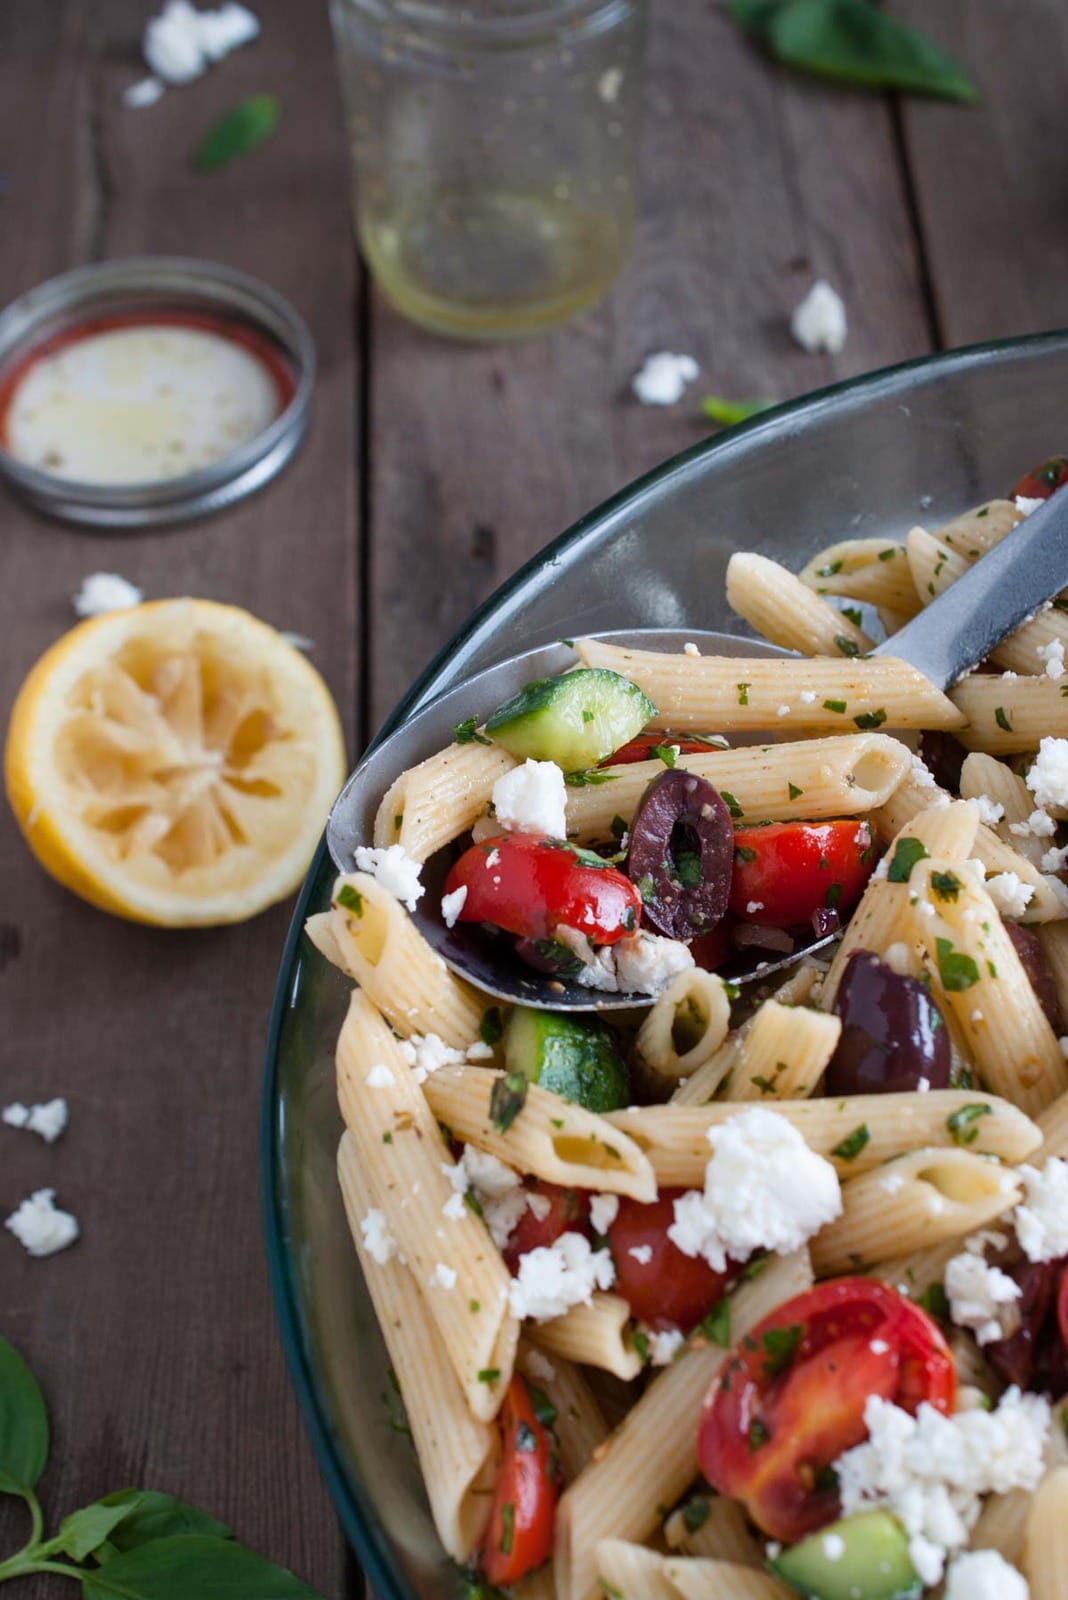 Greek Pasta Salad - Feasting not Fasting